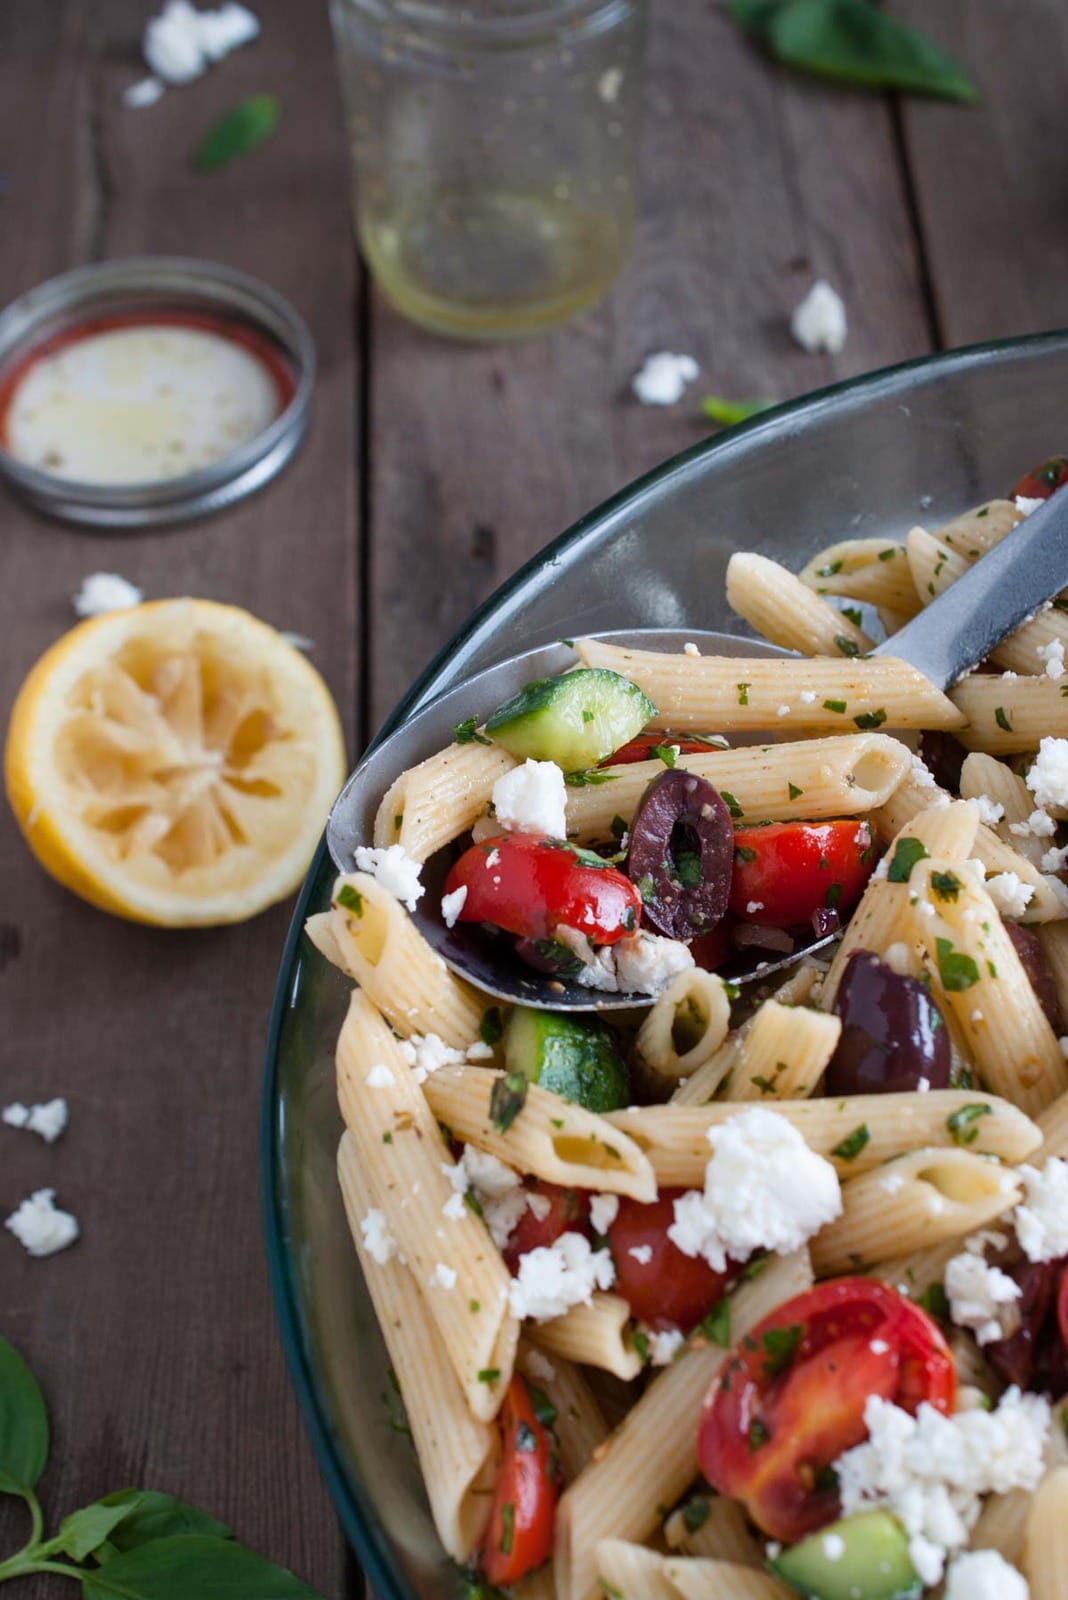 Greek Pasta Salad - Feasting not Fasting